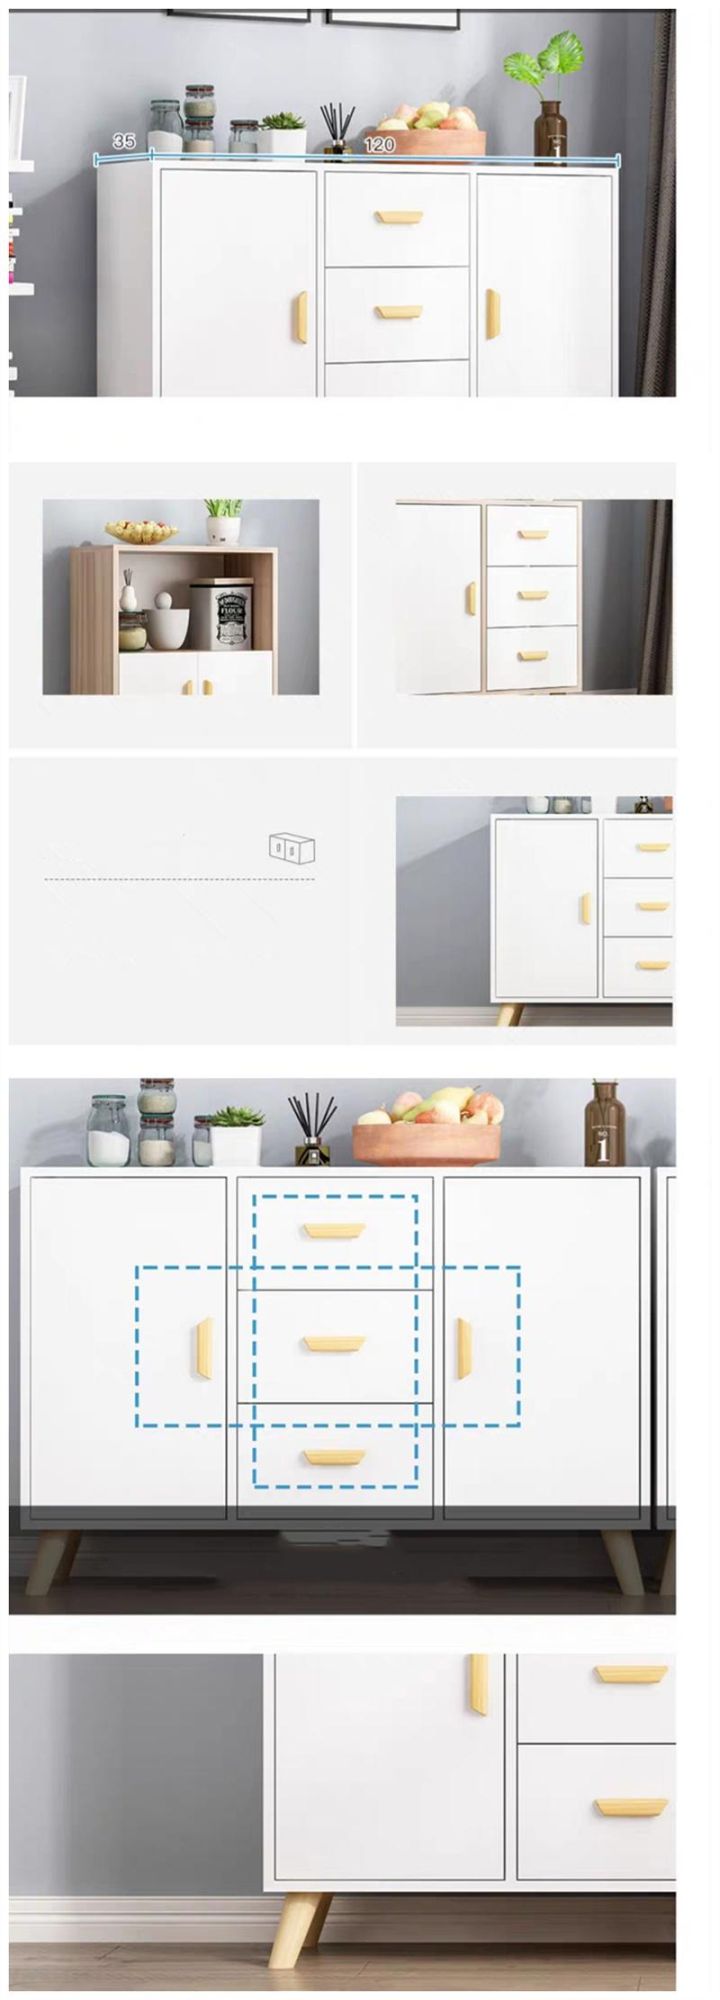 Brown Grey Color Simple Design Kitchen Cabinets Wooden Modern Home Hotel Living Room Furniture Storage Cabinet